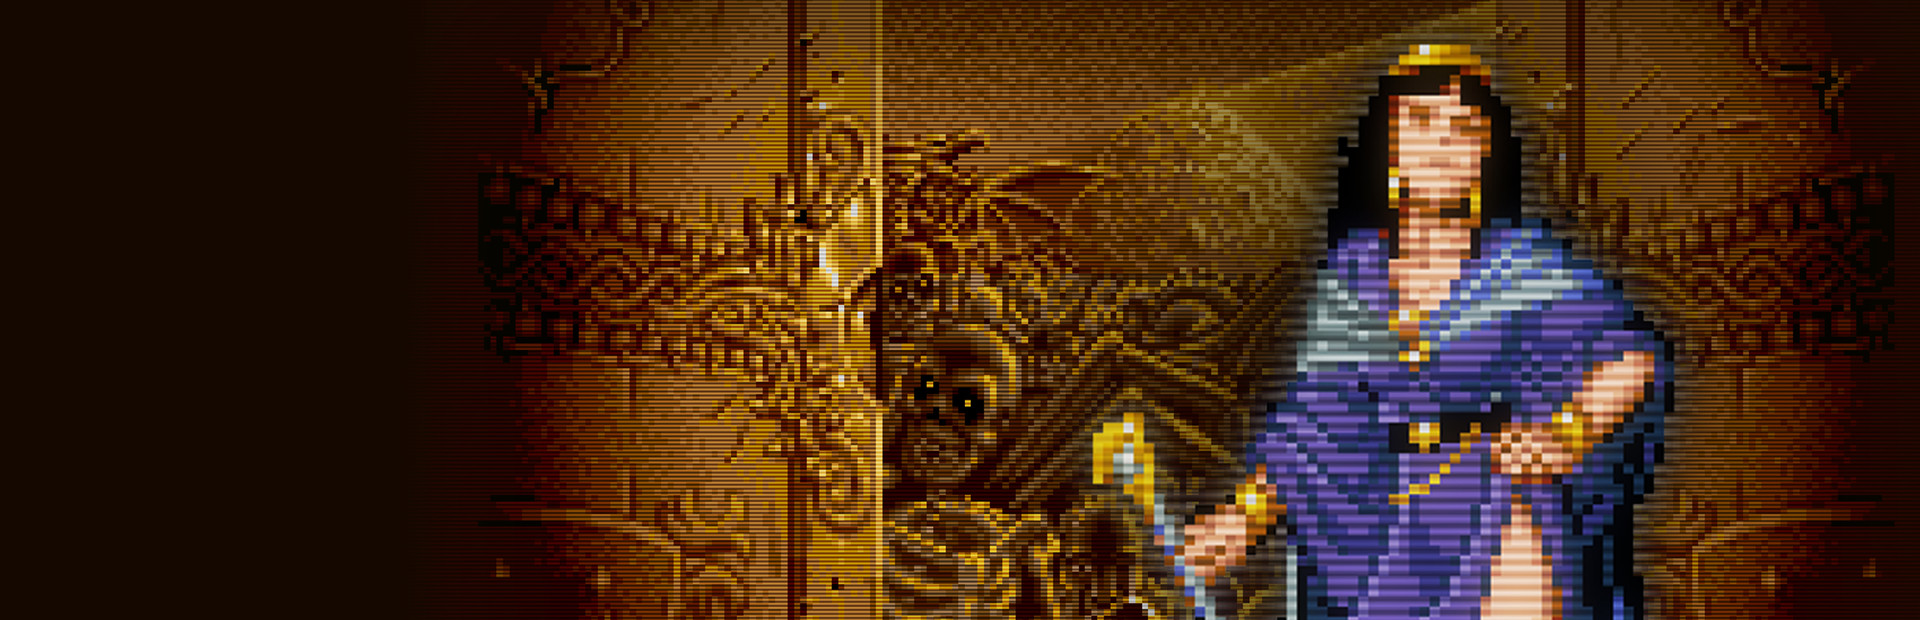 Retro Classix: Gate of Doom cover image